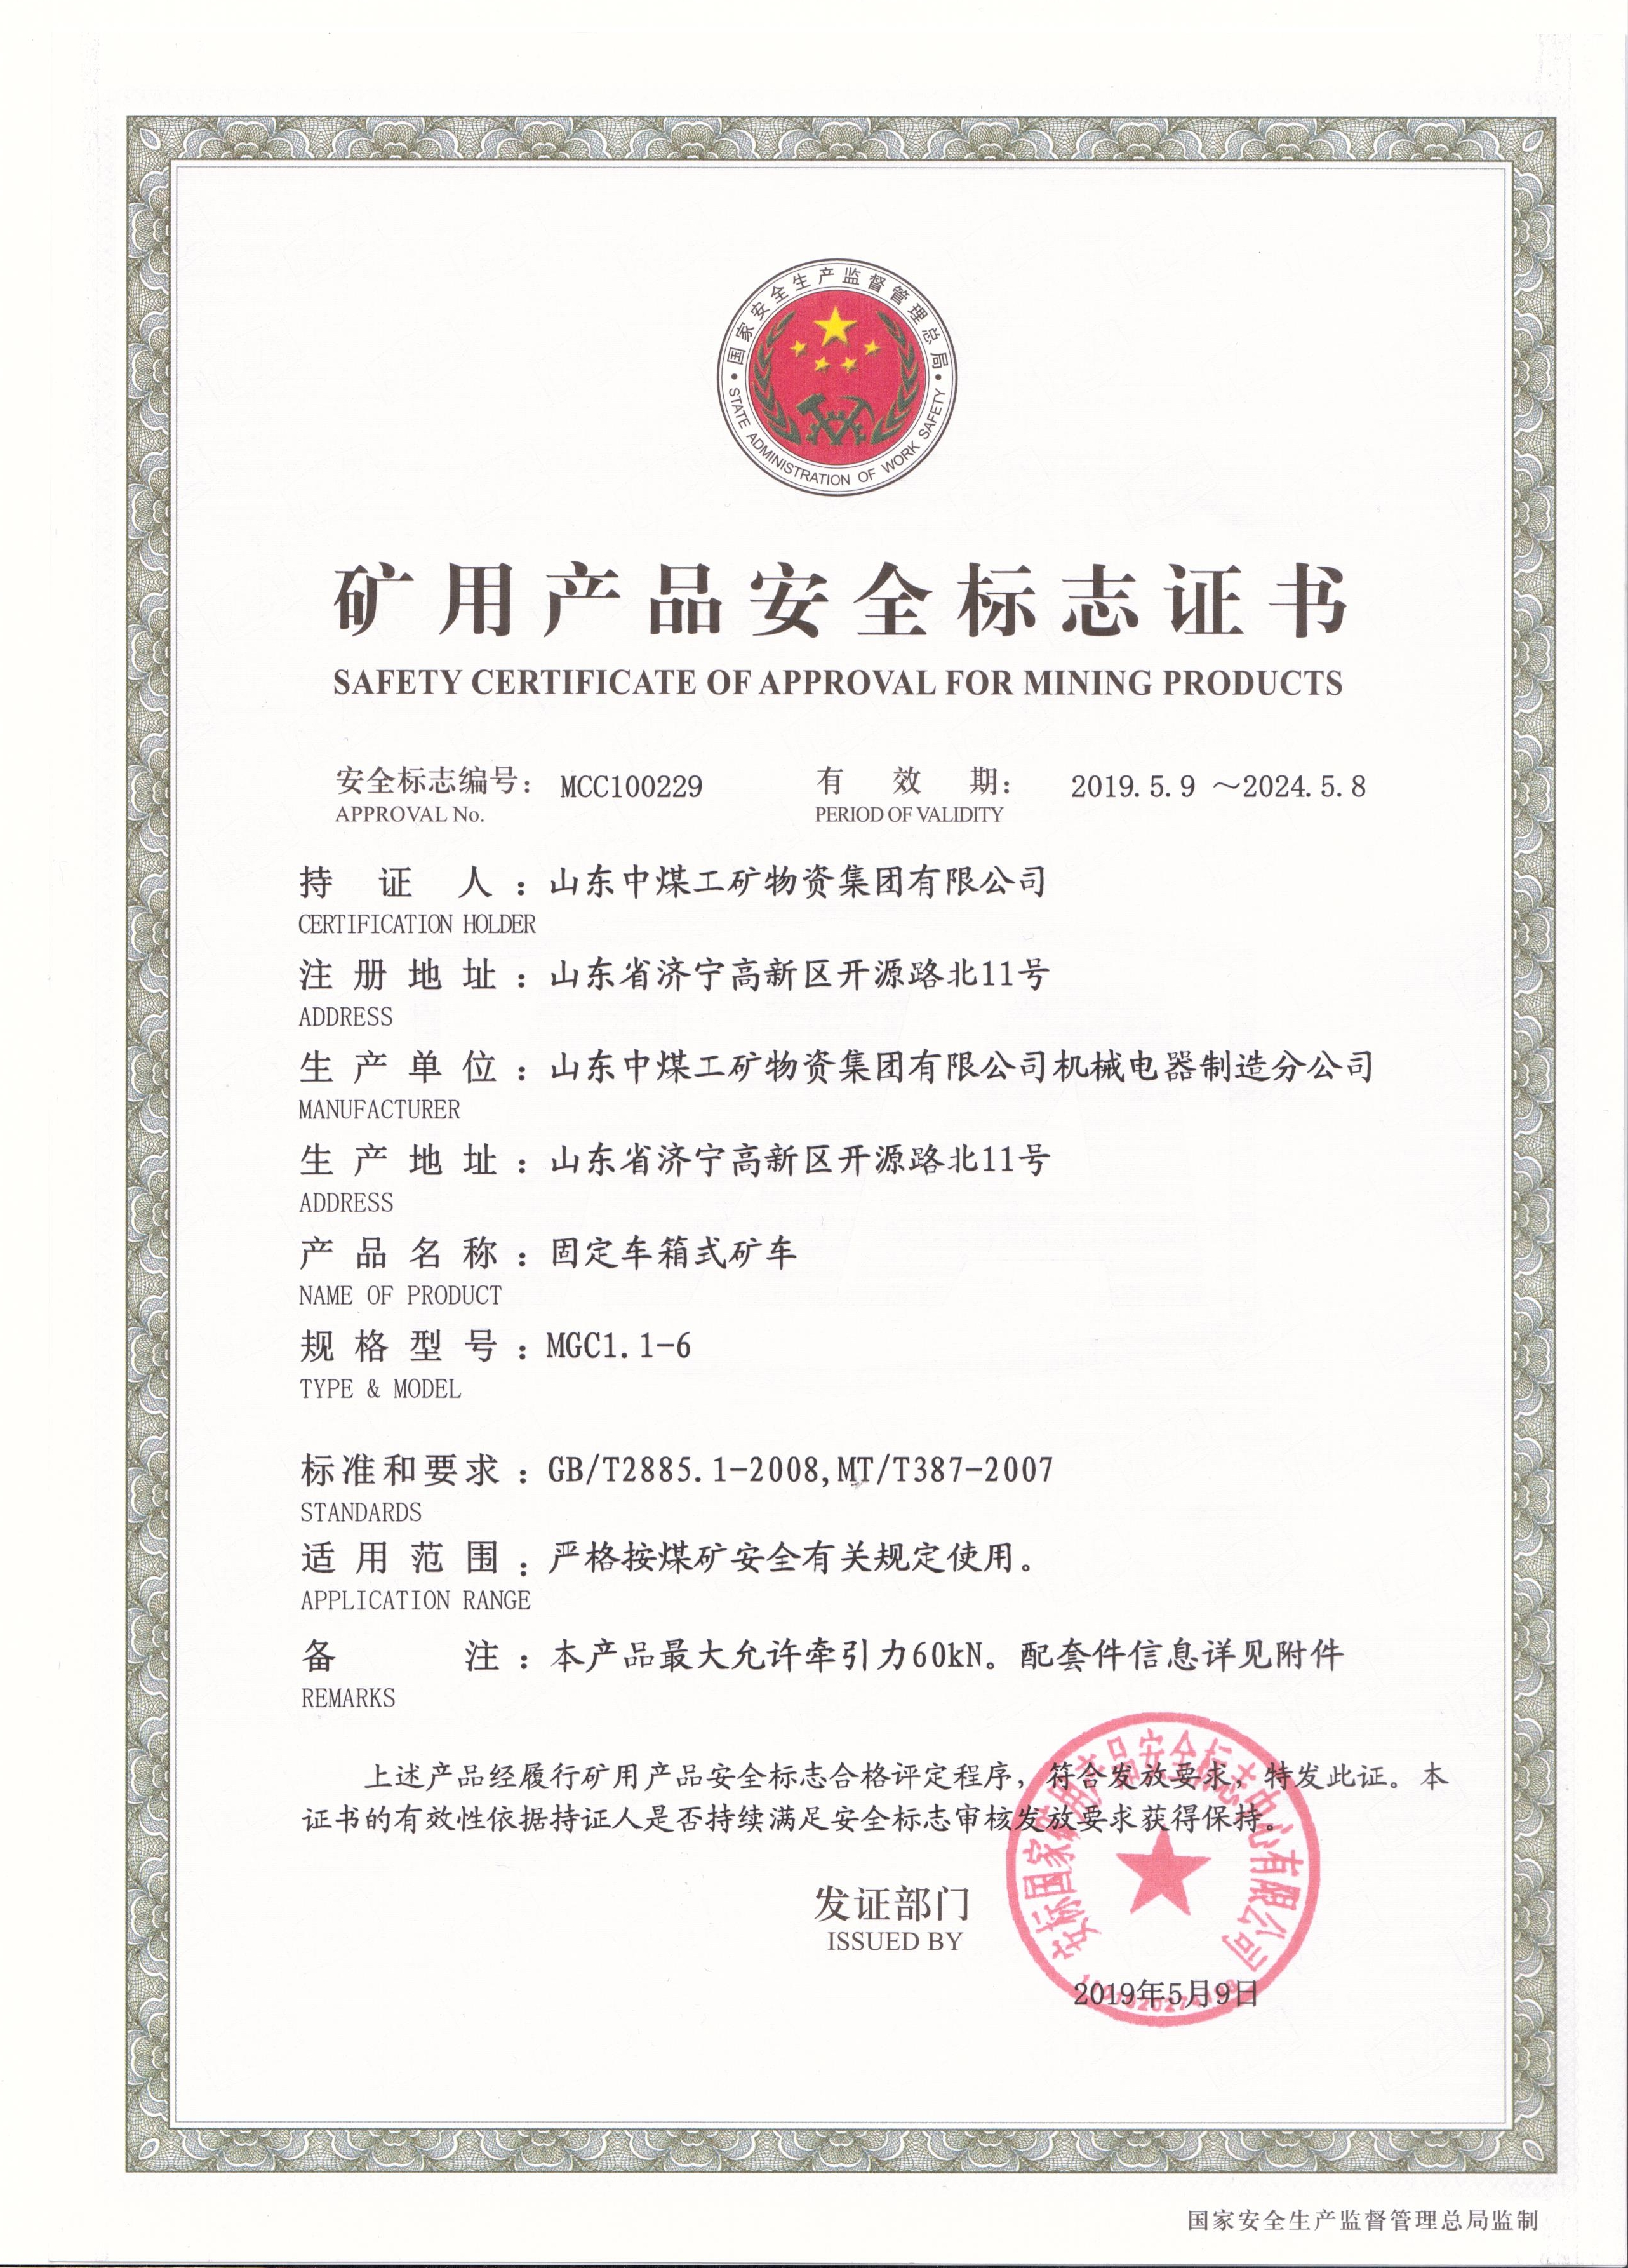 Fixed Mine Wagon MA Certificate